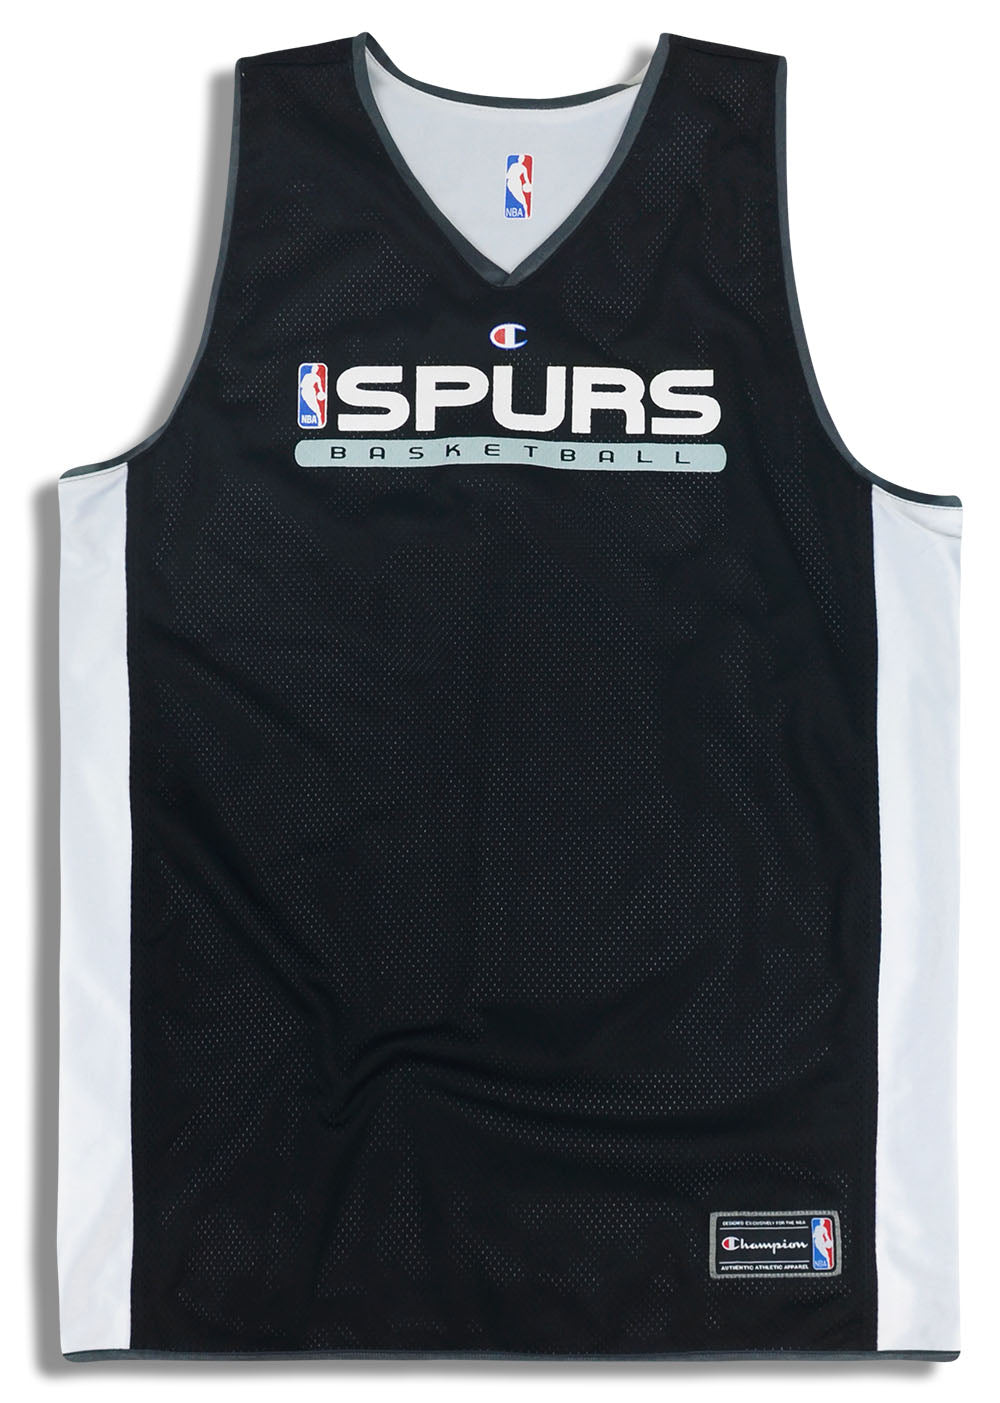 San Antonio Spurs practice jersey kids small for Sale in San Antonio